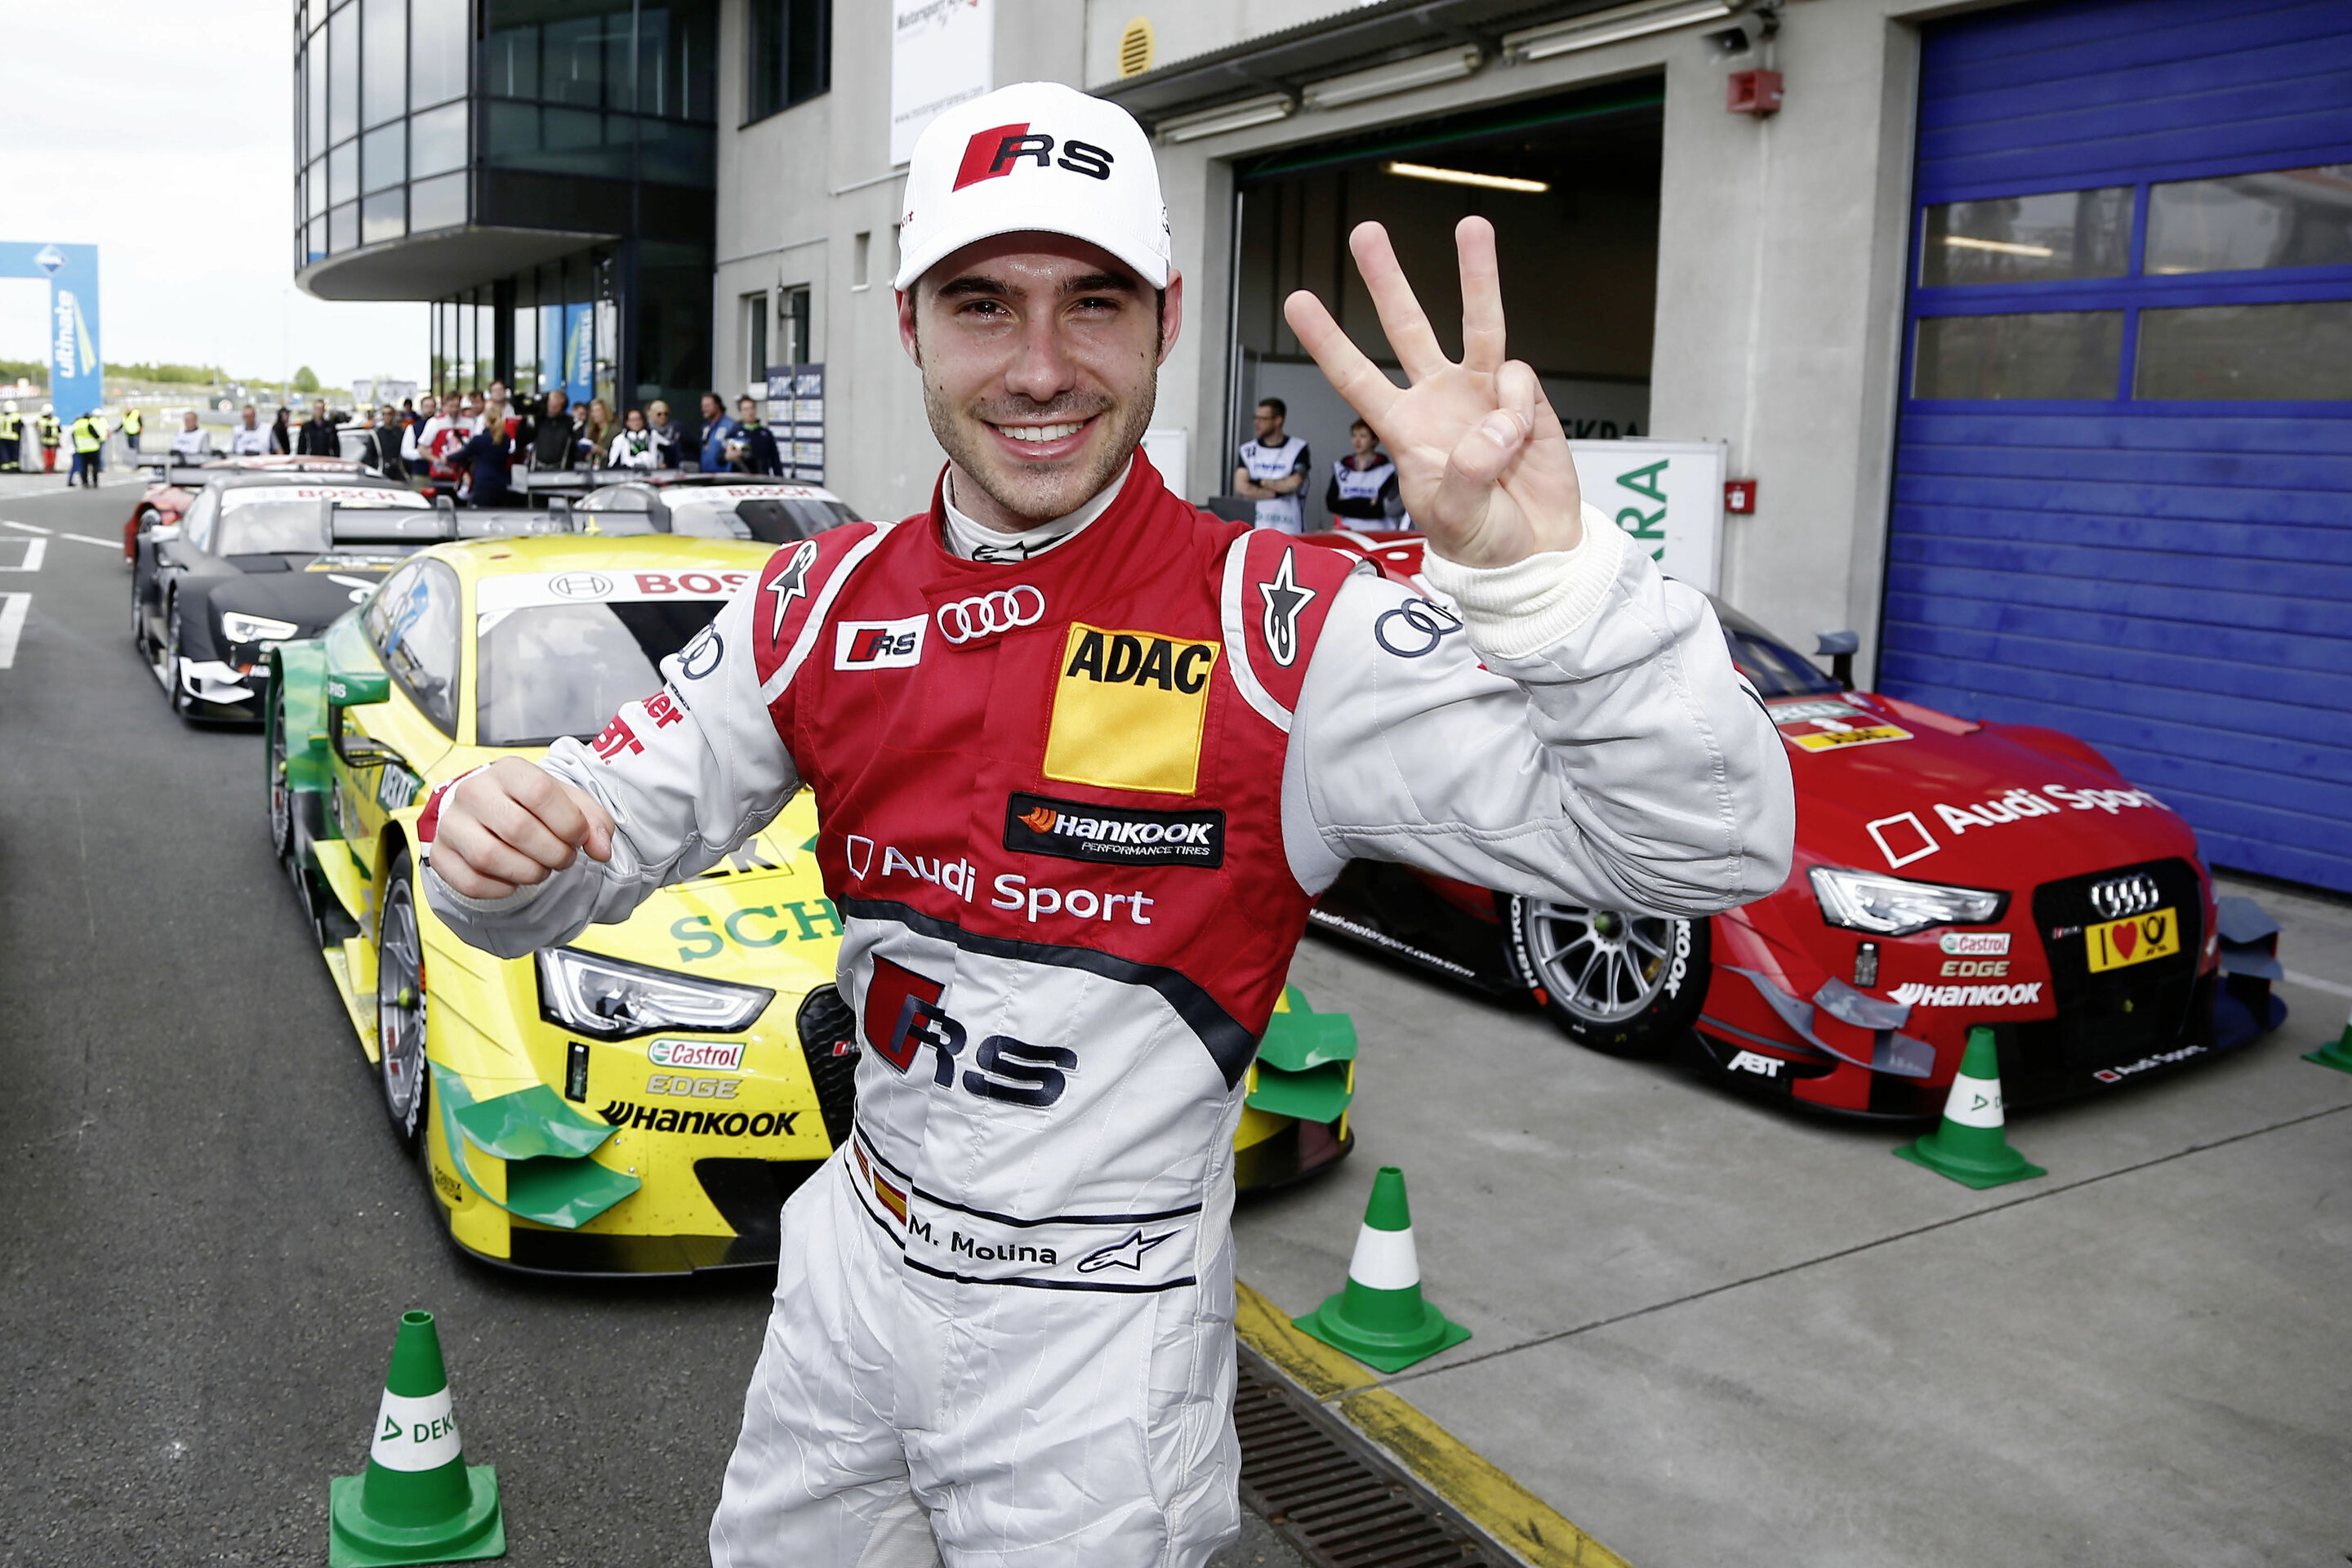 'Magic' Molina: record lap in an Audi